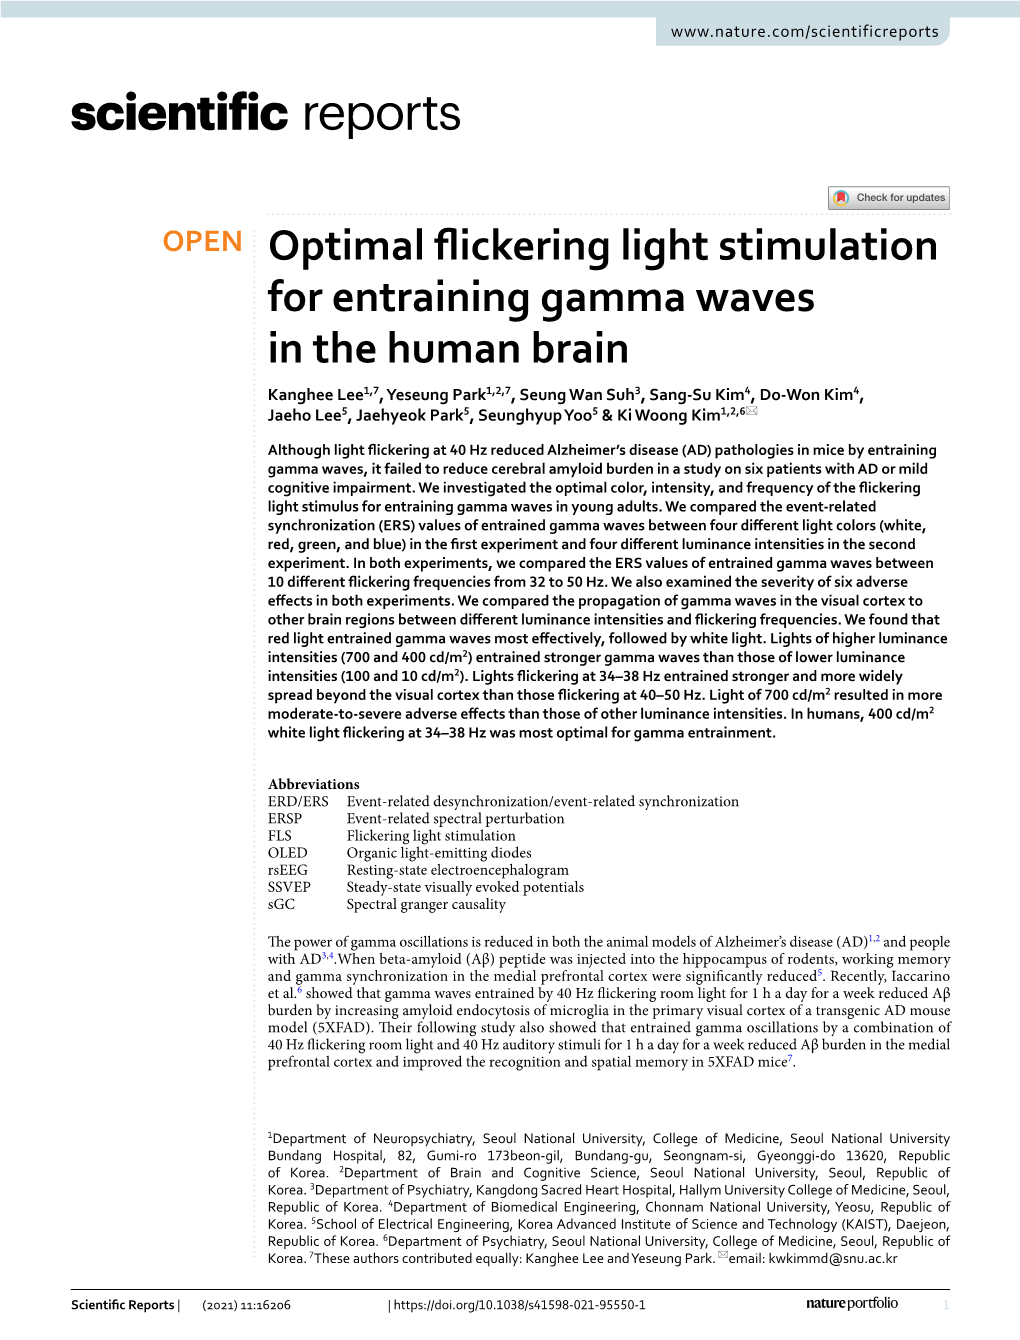 Optimal Flickering Light Stimulation for Entraining Gamma Waves in The